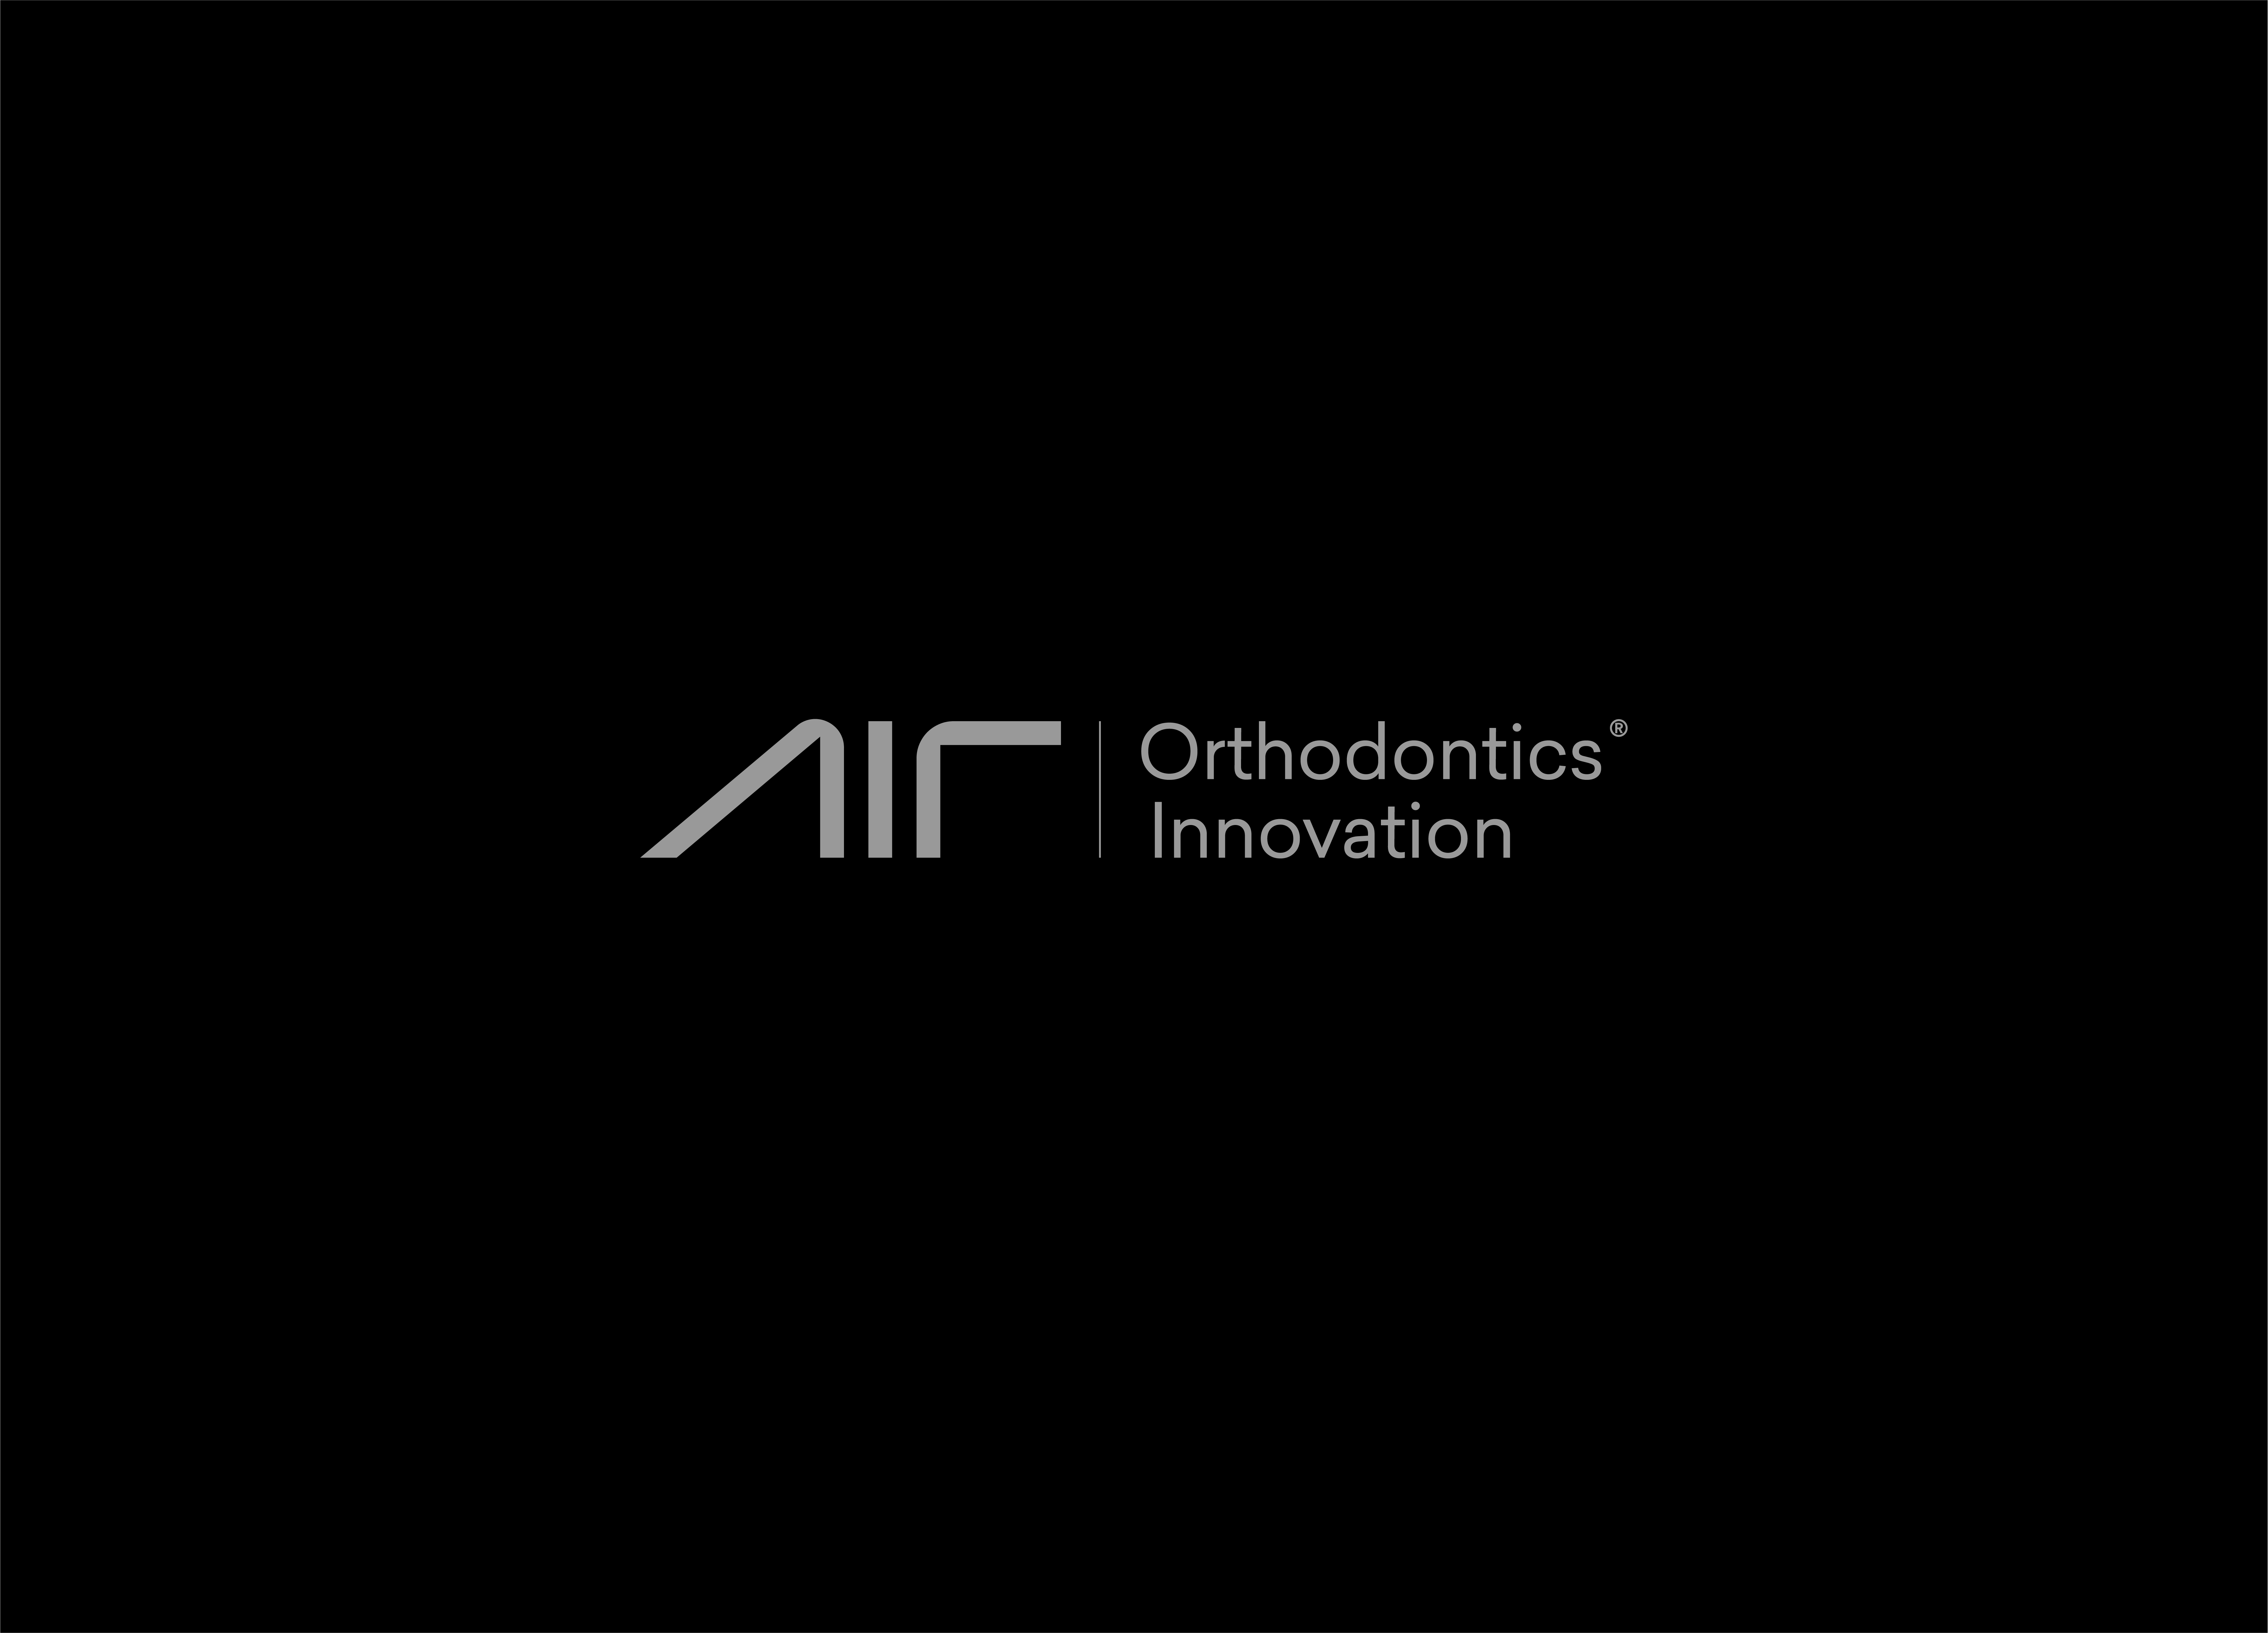 Air Orthodontics